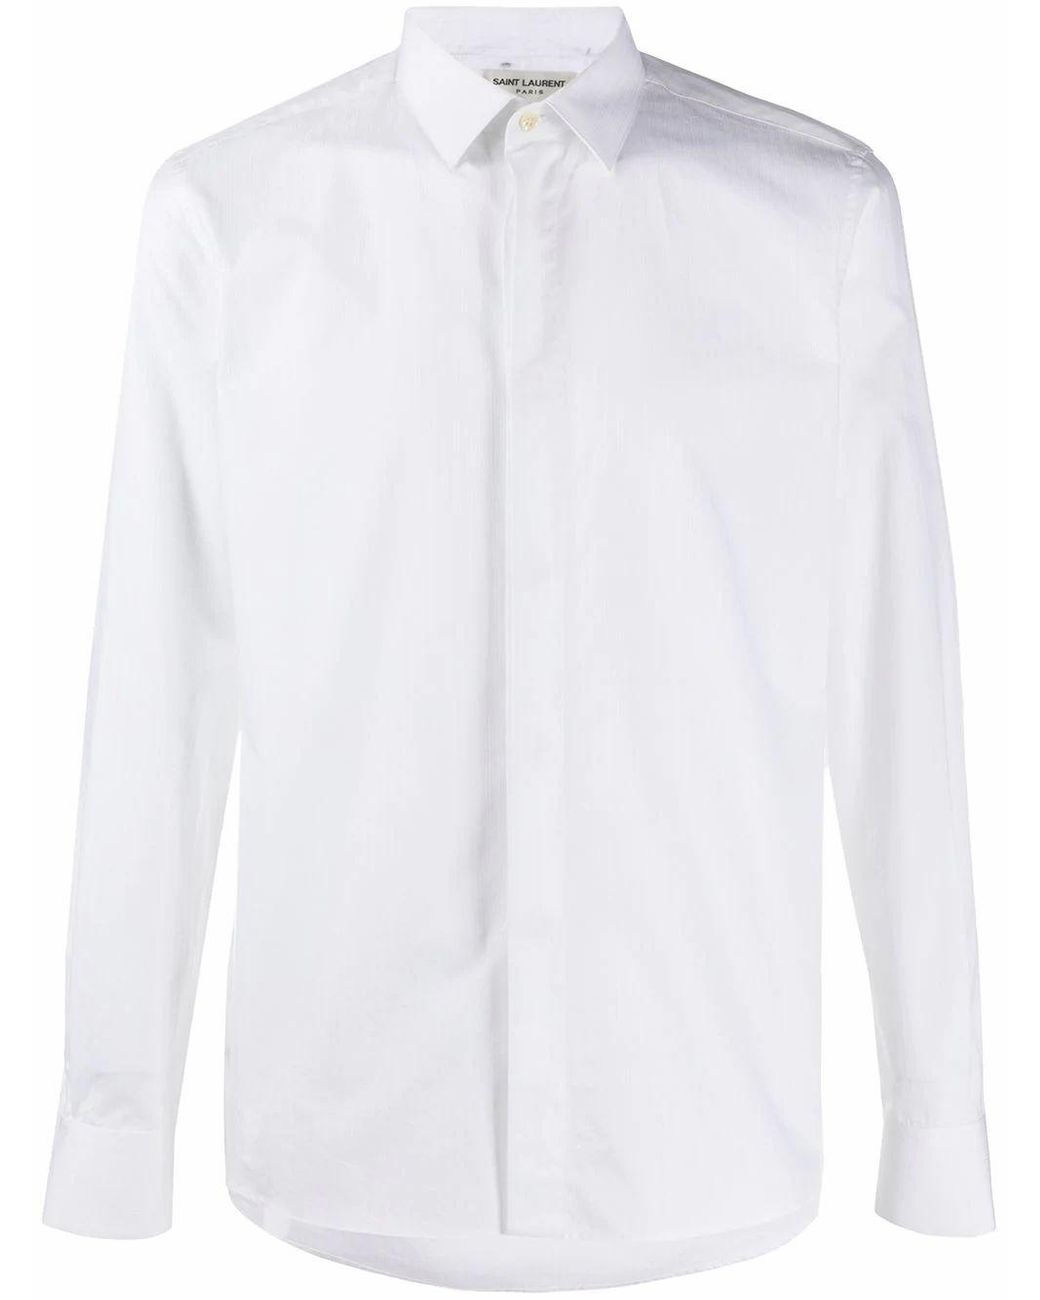 Saint Laurent Cotton Shirt in White for Men - Lyst